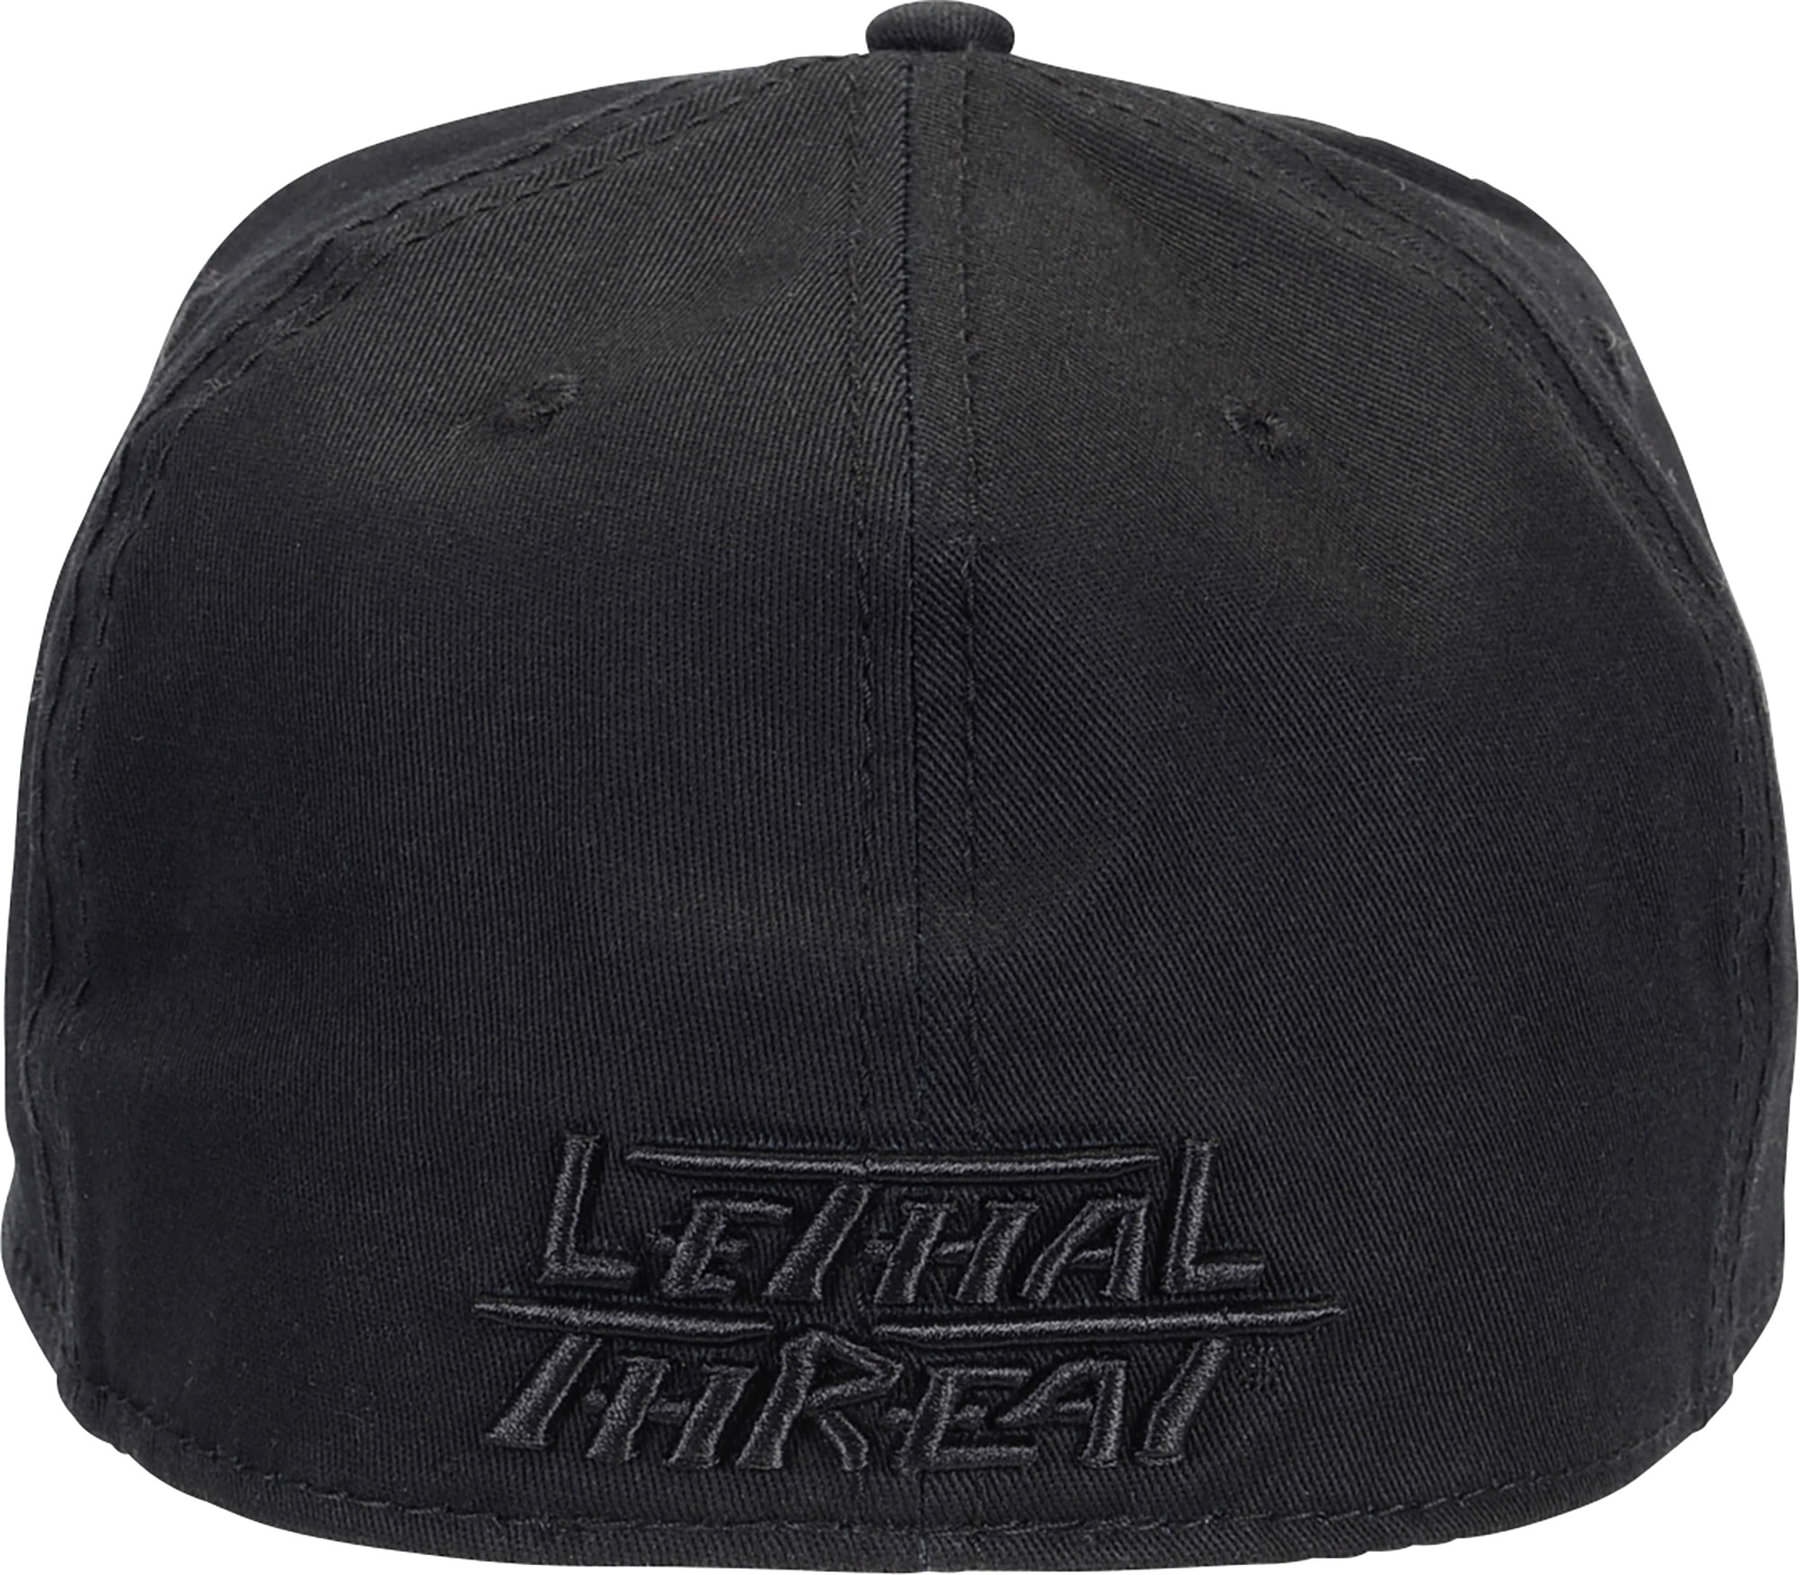 LETHAL THREAT CAP